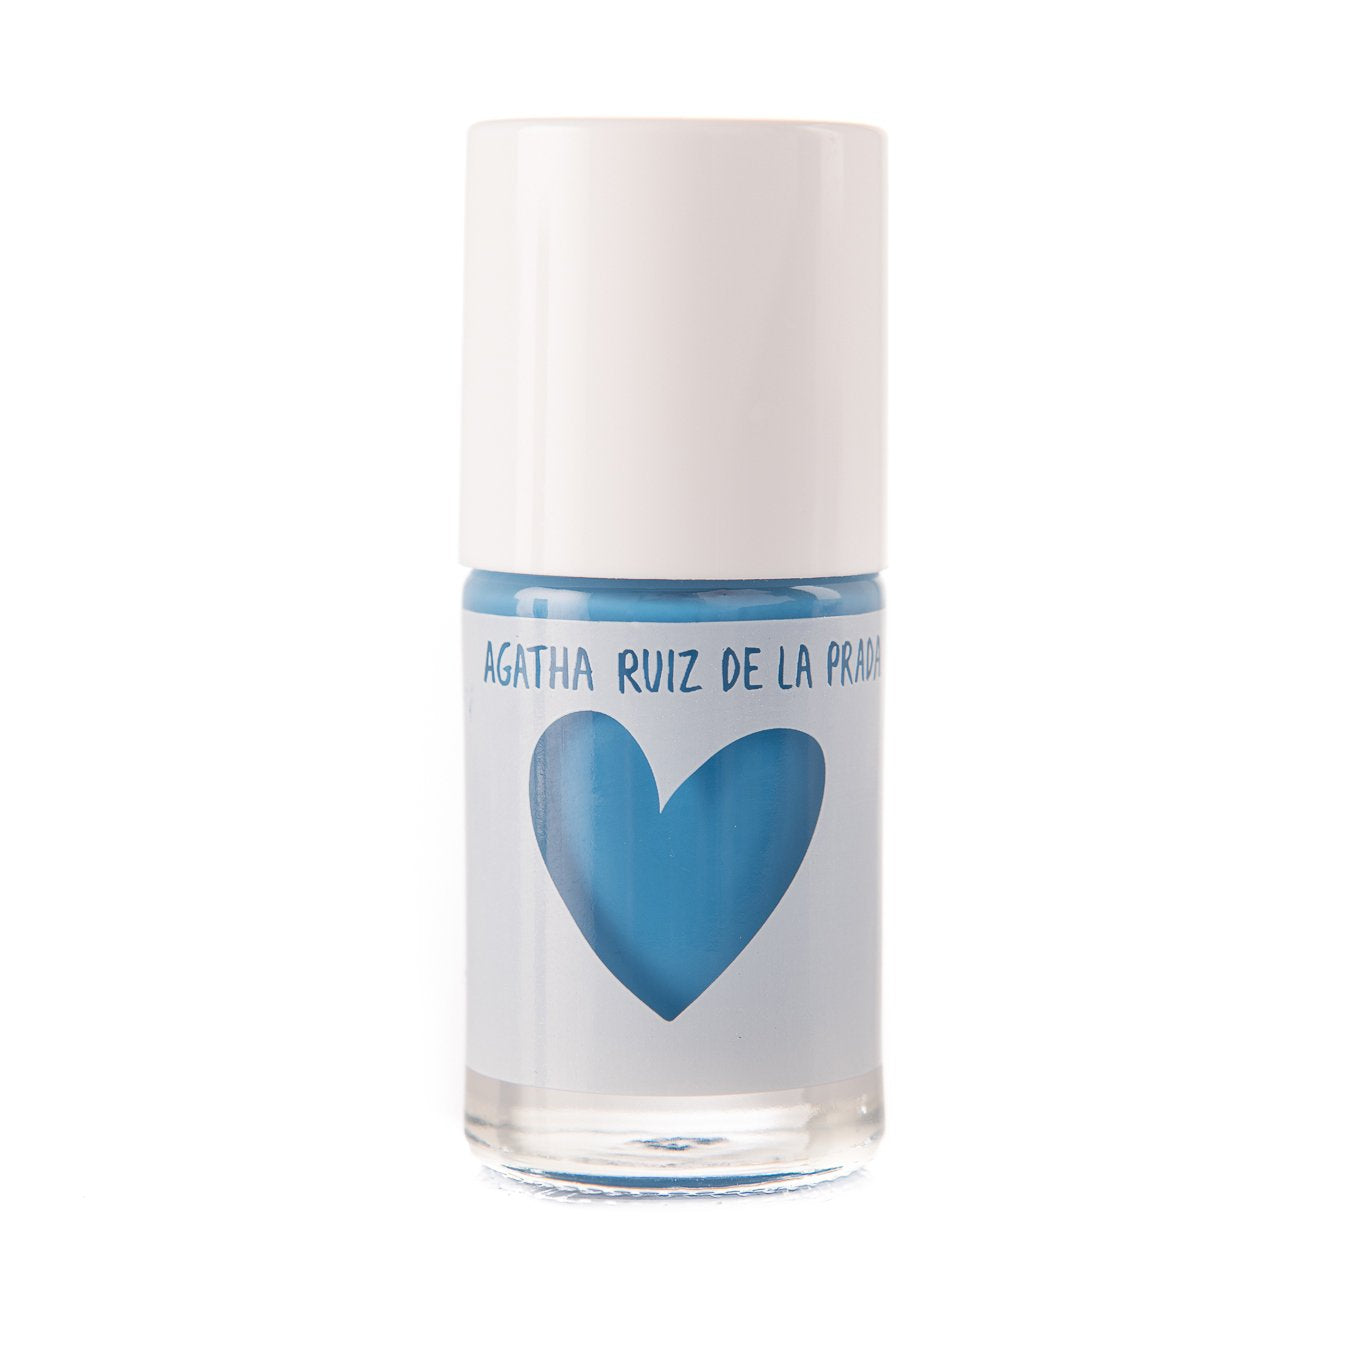 Agatha Ruiz de la Prada Blue Nail Polish Bottle